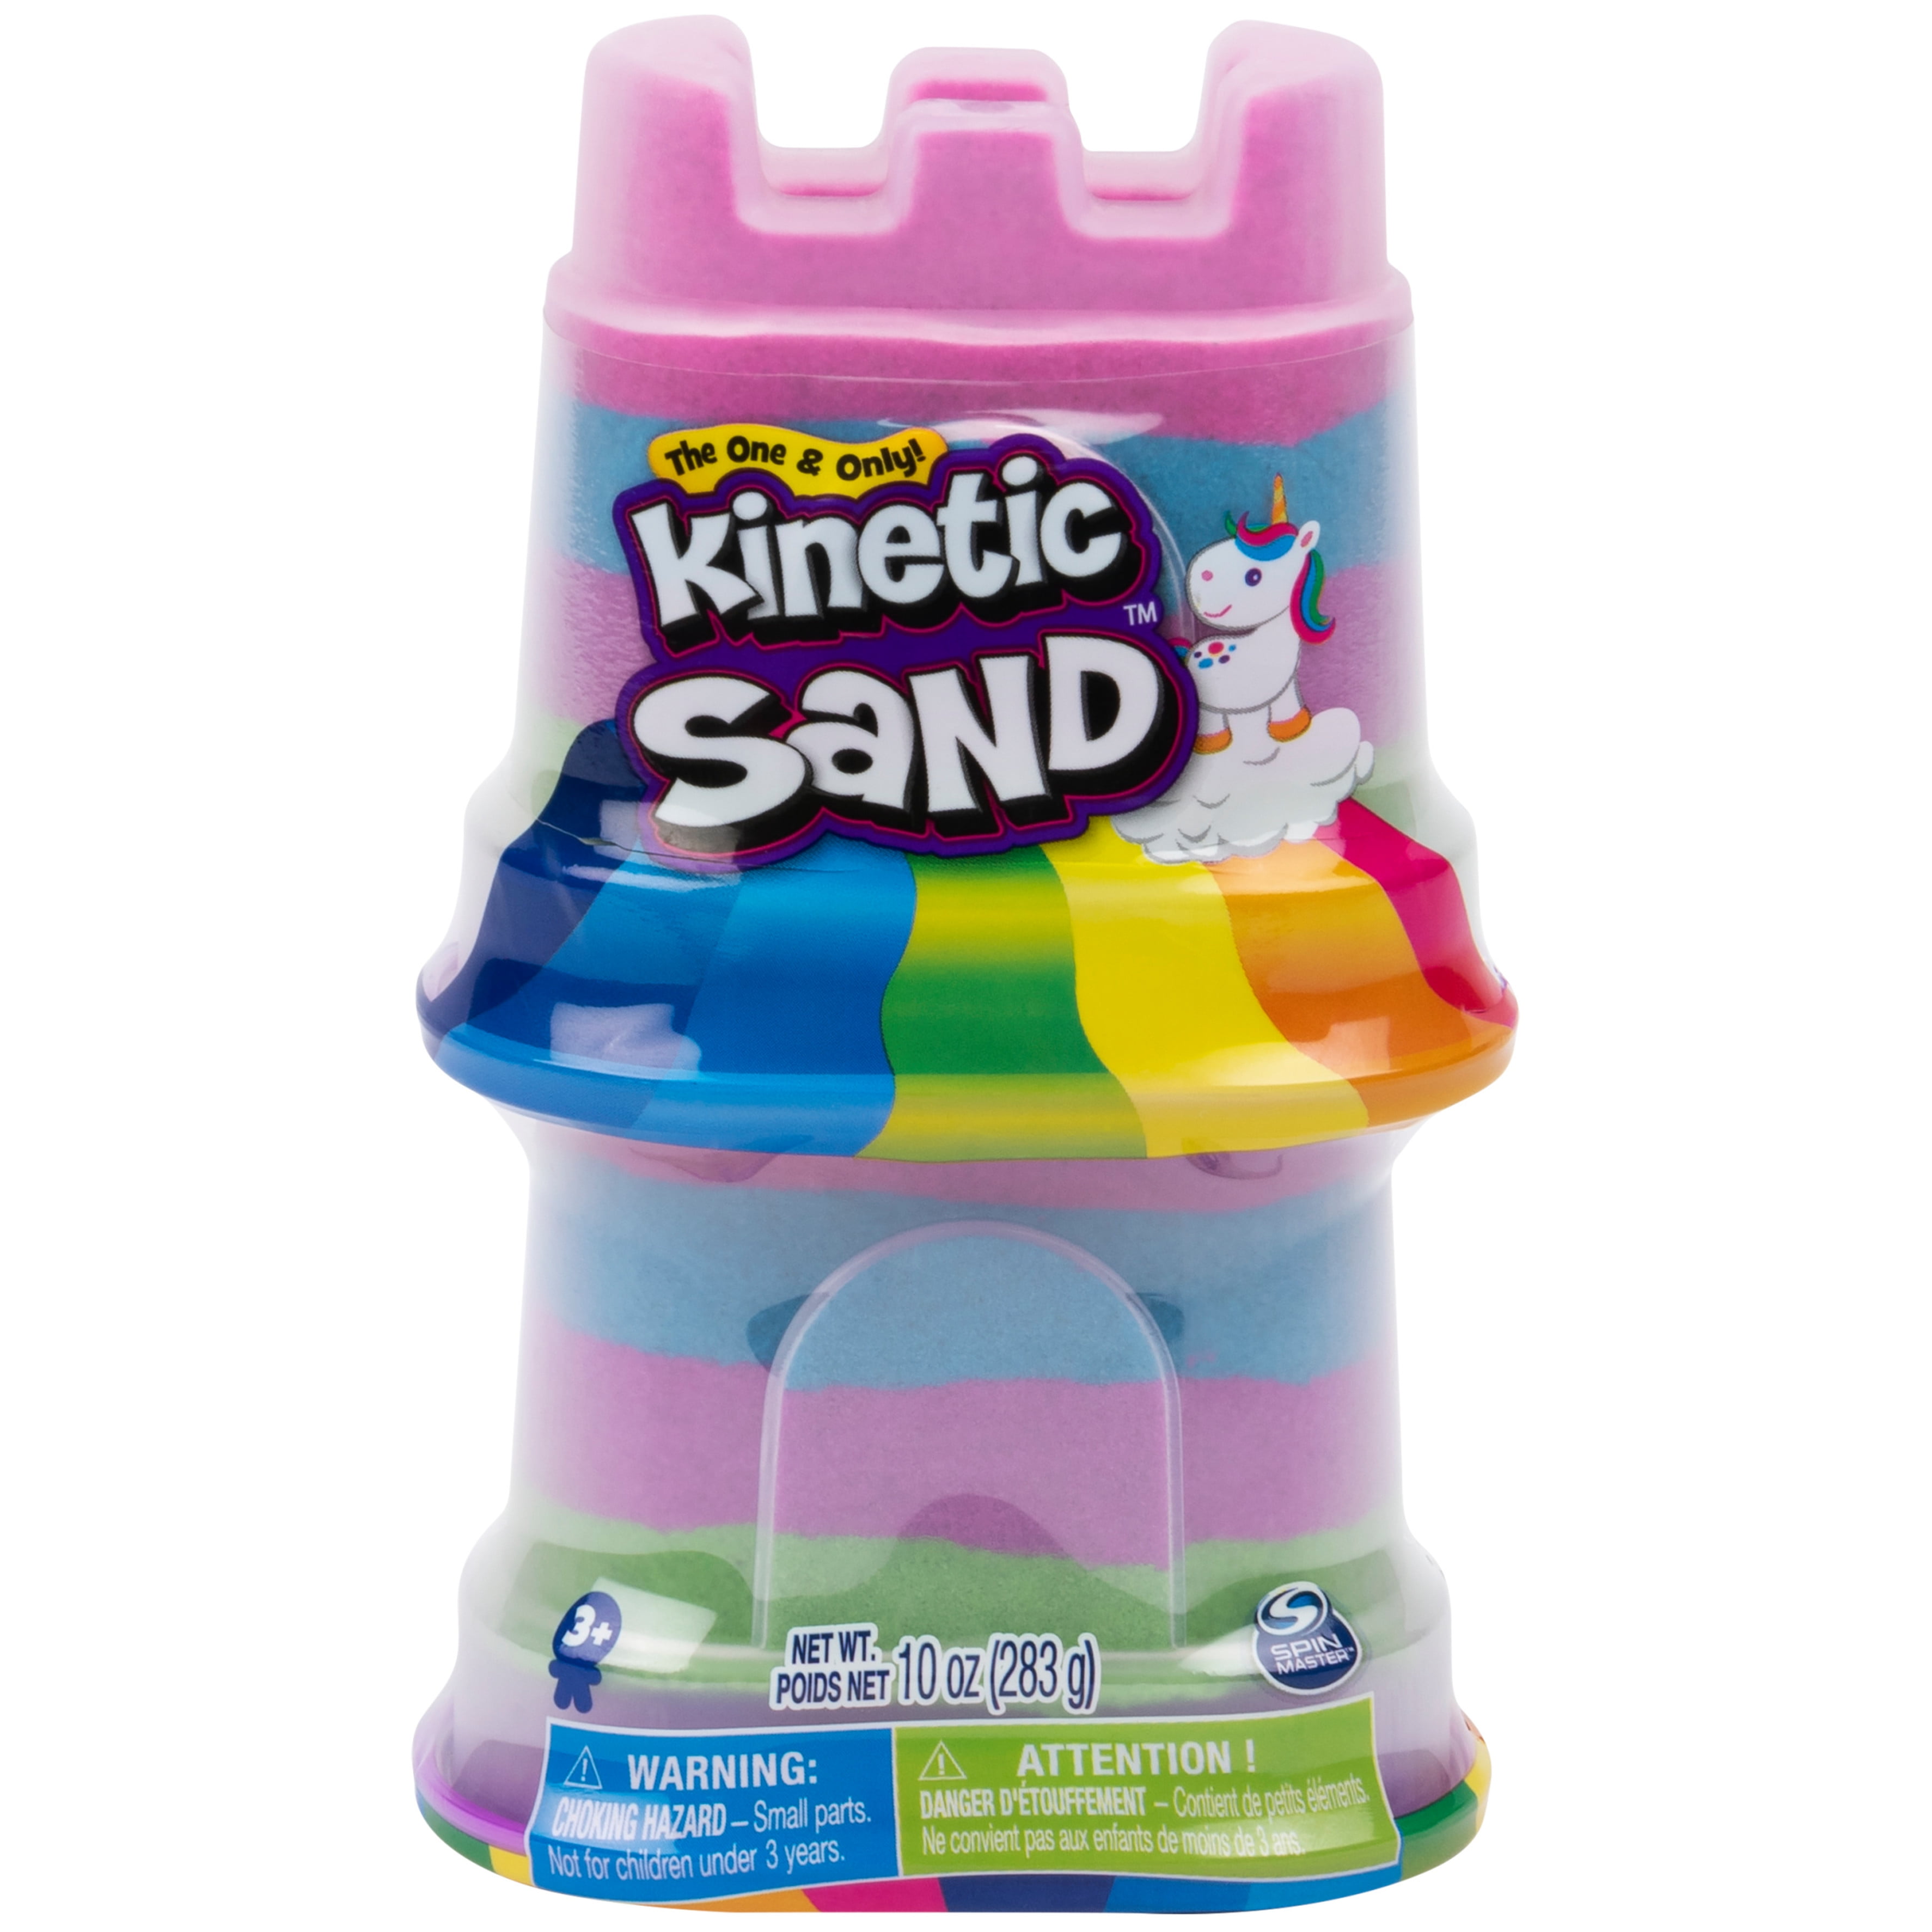 Kinetic Sand Mold n Flow, 1.5lbs Red and Teal Play Sand, 3 Tools Sensory  Toys for Kids Ages 3+